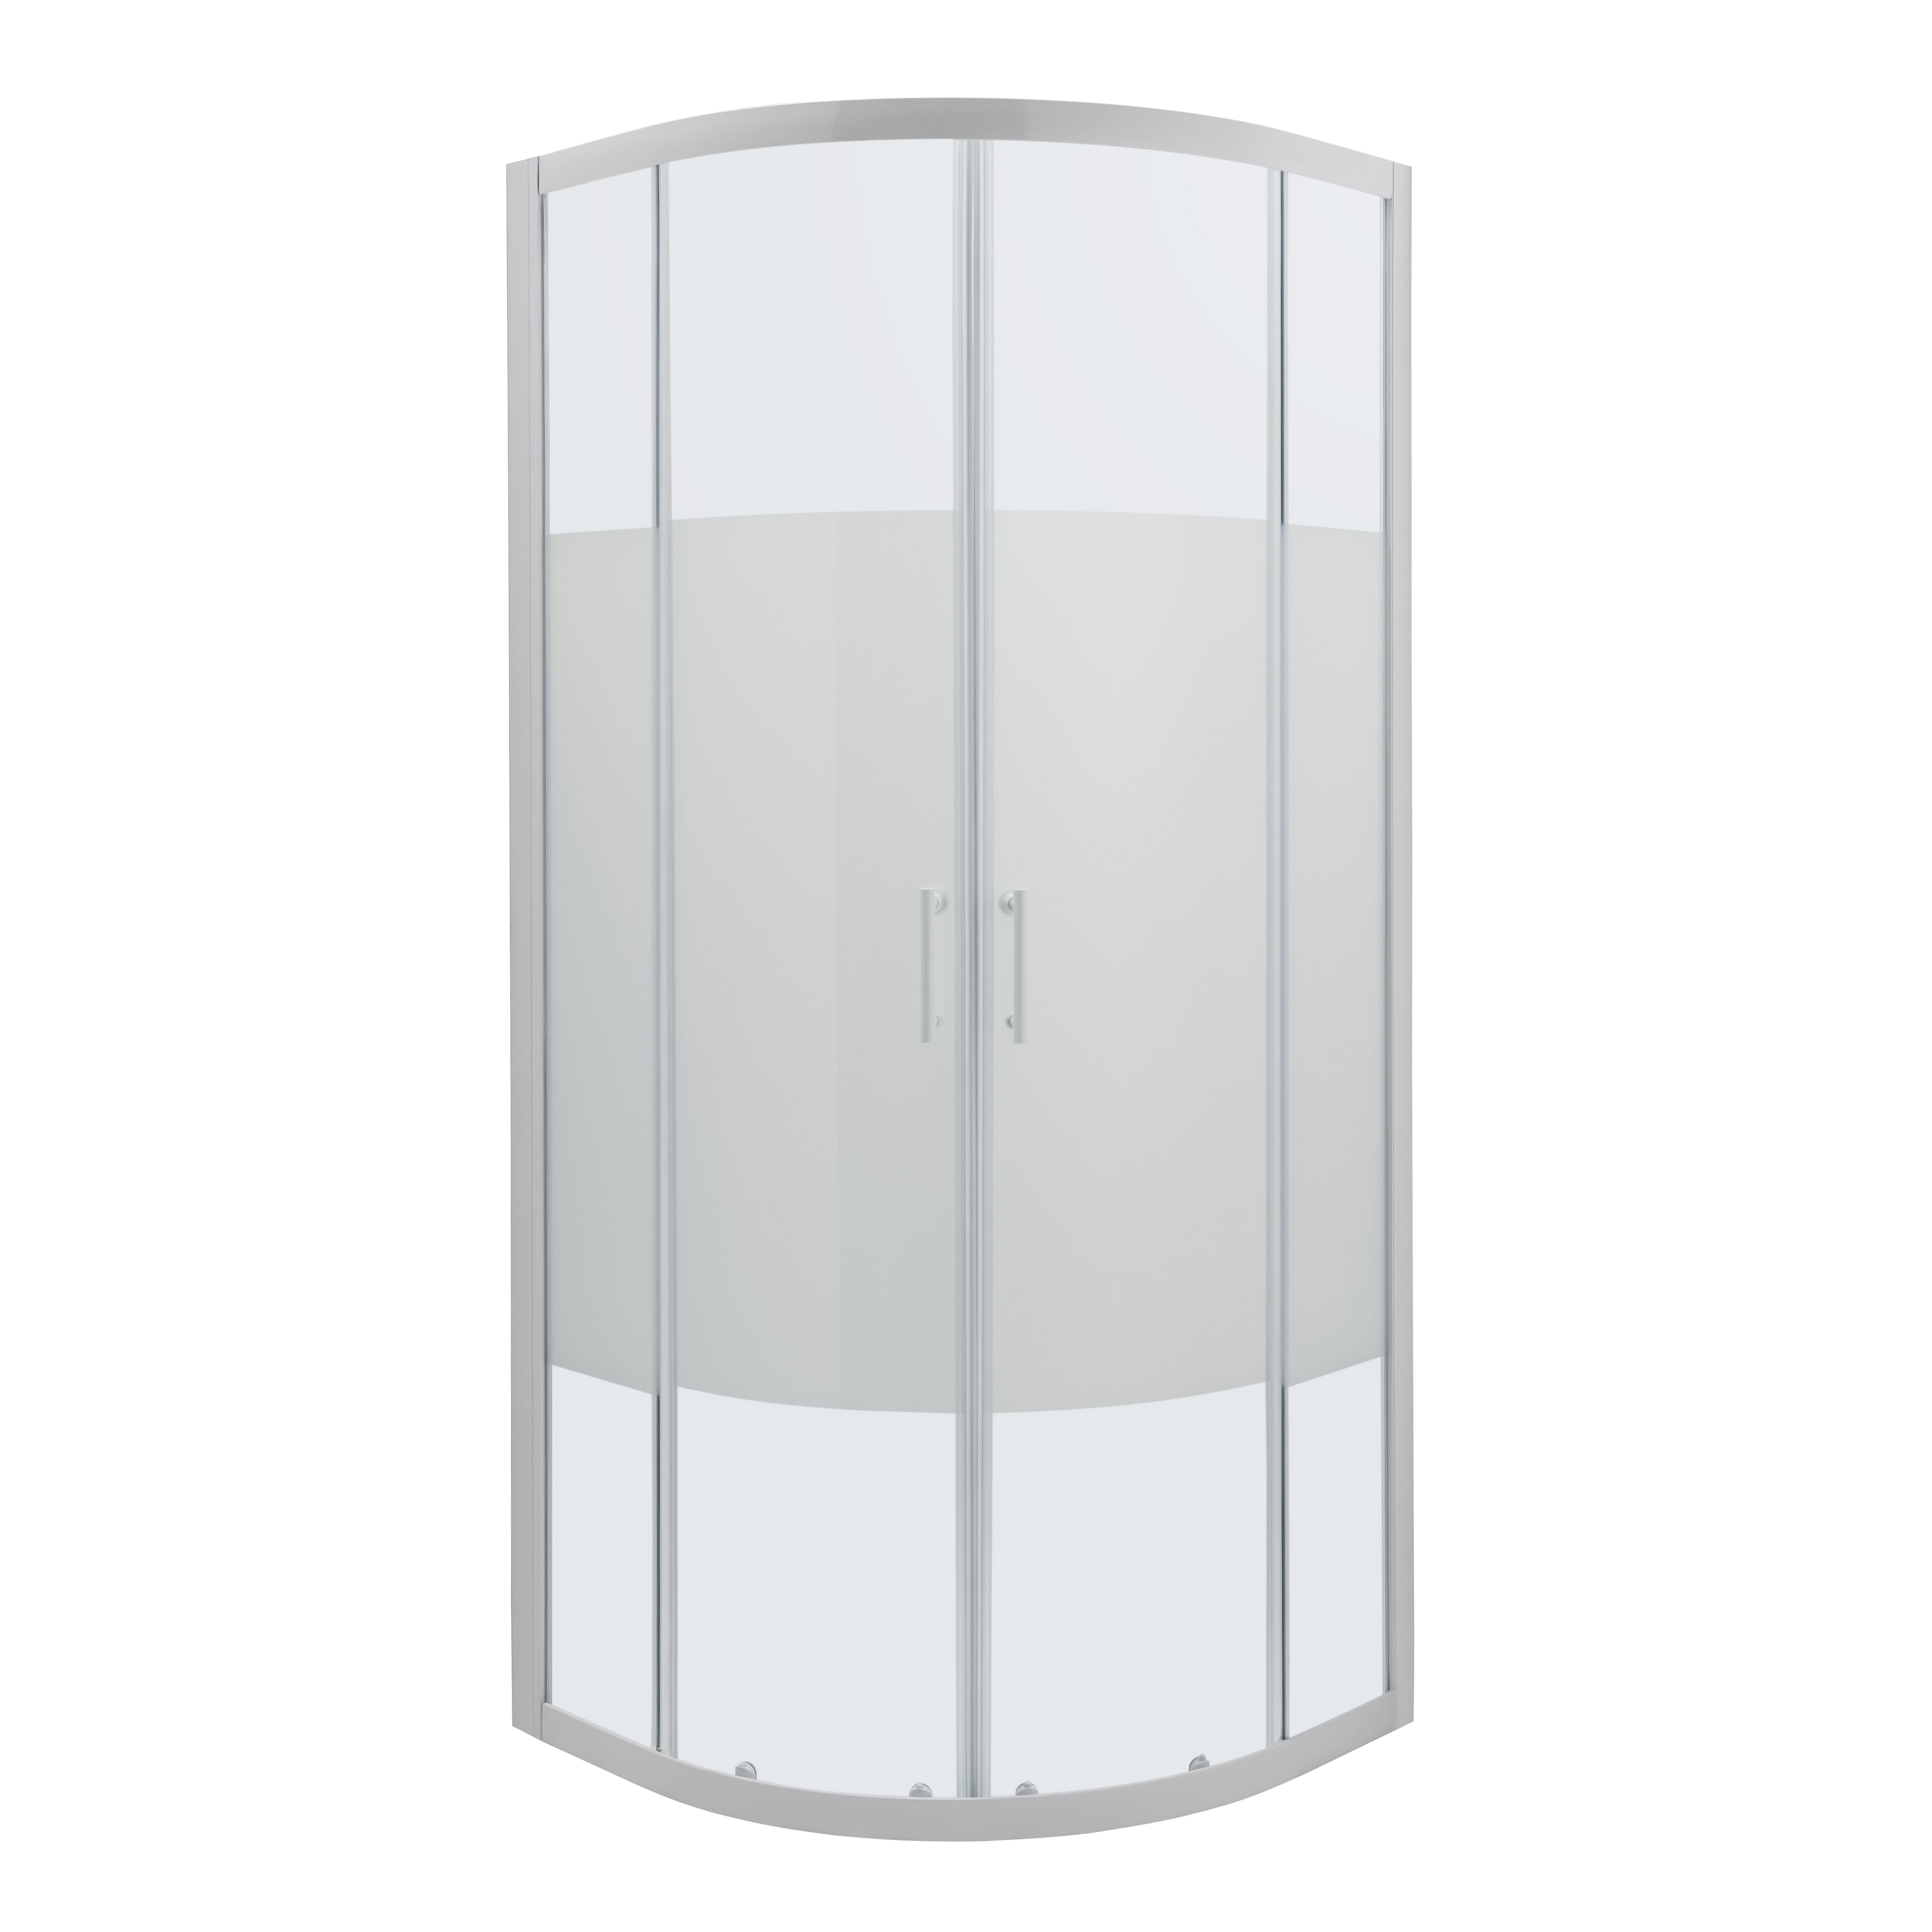 GoodHome Onega White Quadrant Shower Enclosure & tray with Corner entry double sliding door (H)190cm (W)80cm (D)80cm